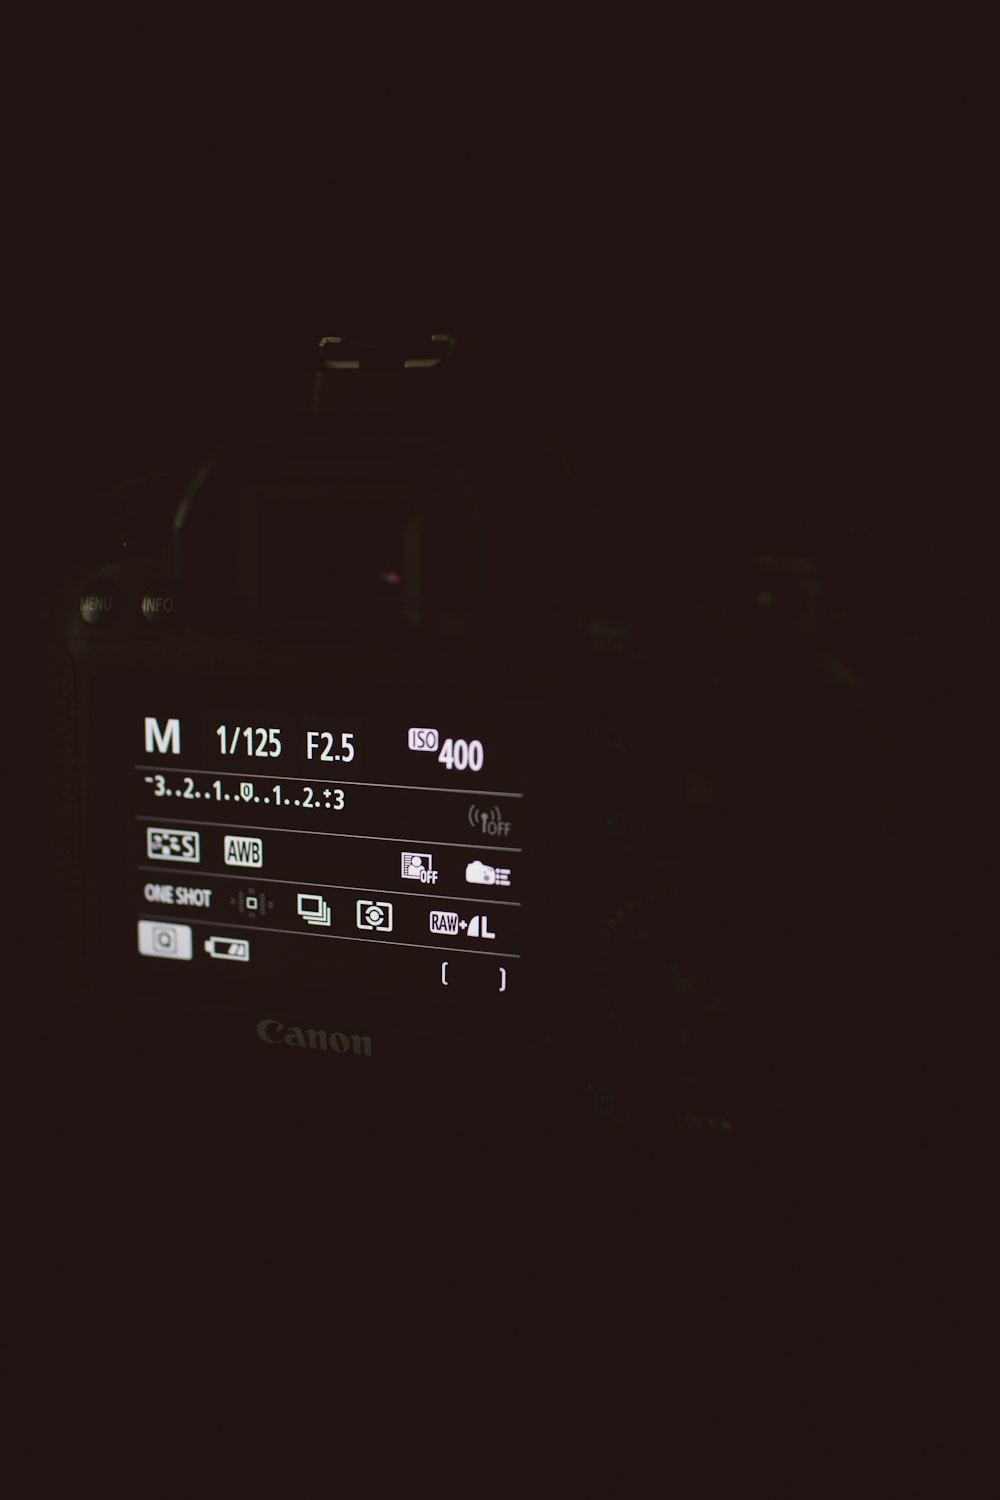 turned-on black Canon DSLR camera